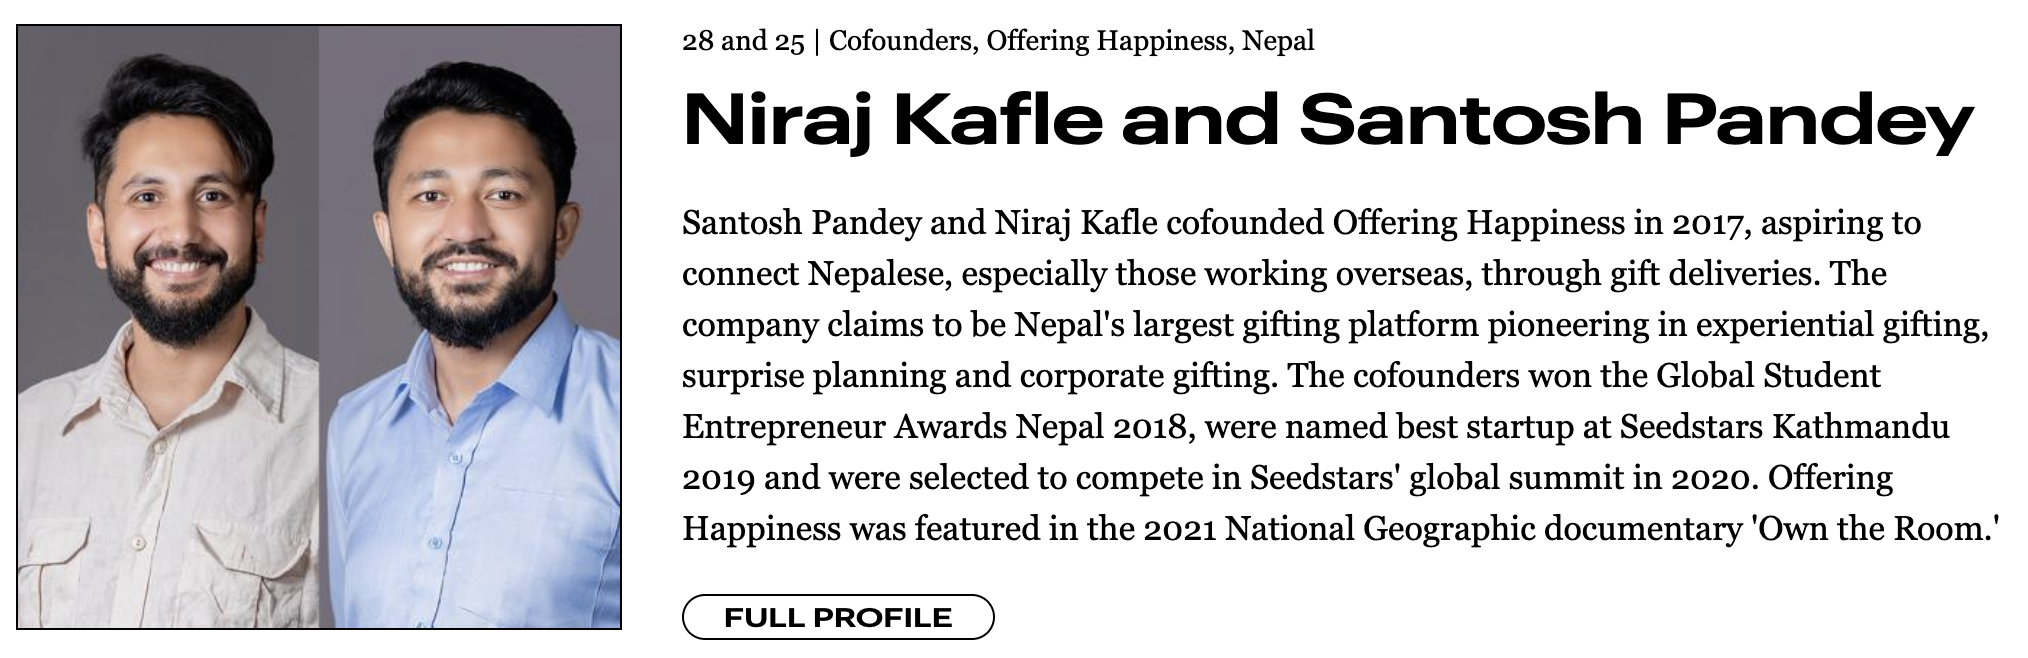 Niraj Kafle and Santosh Pandey